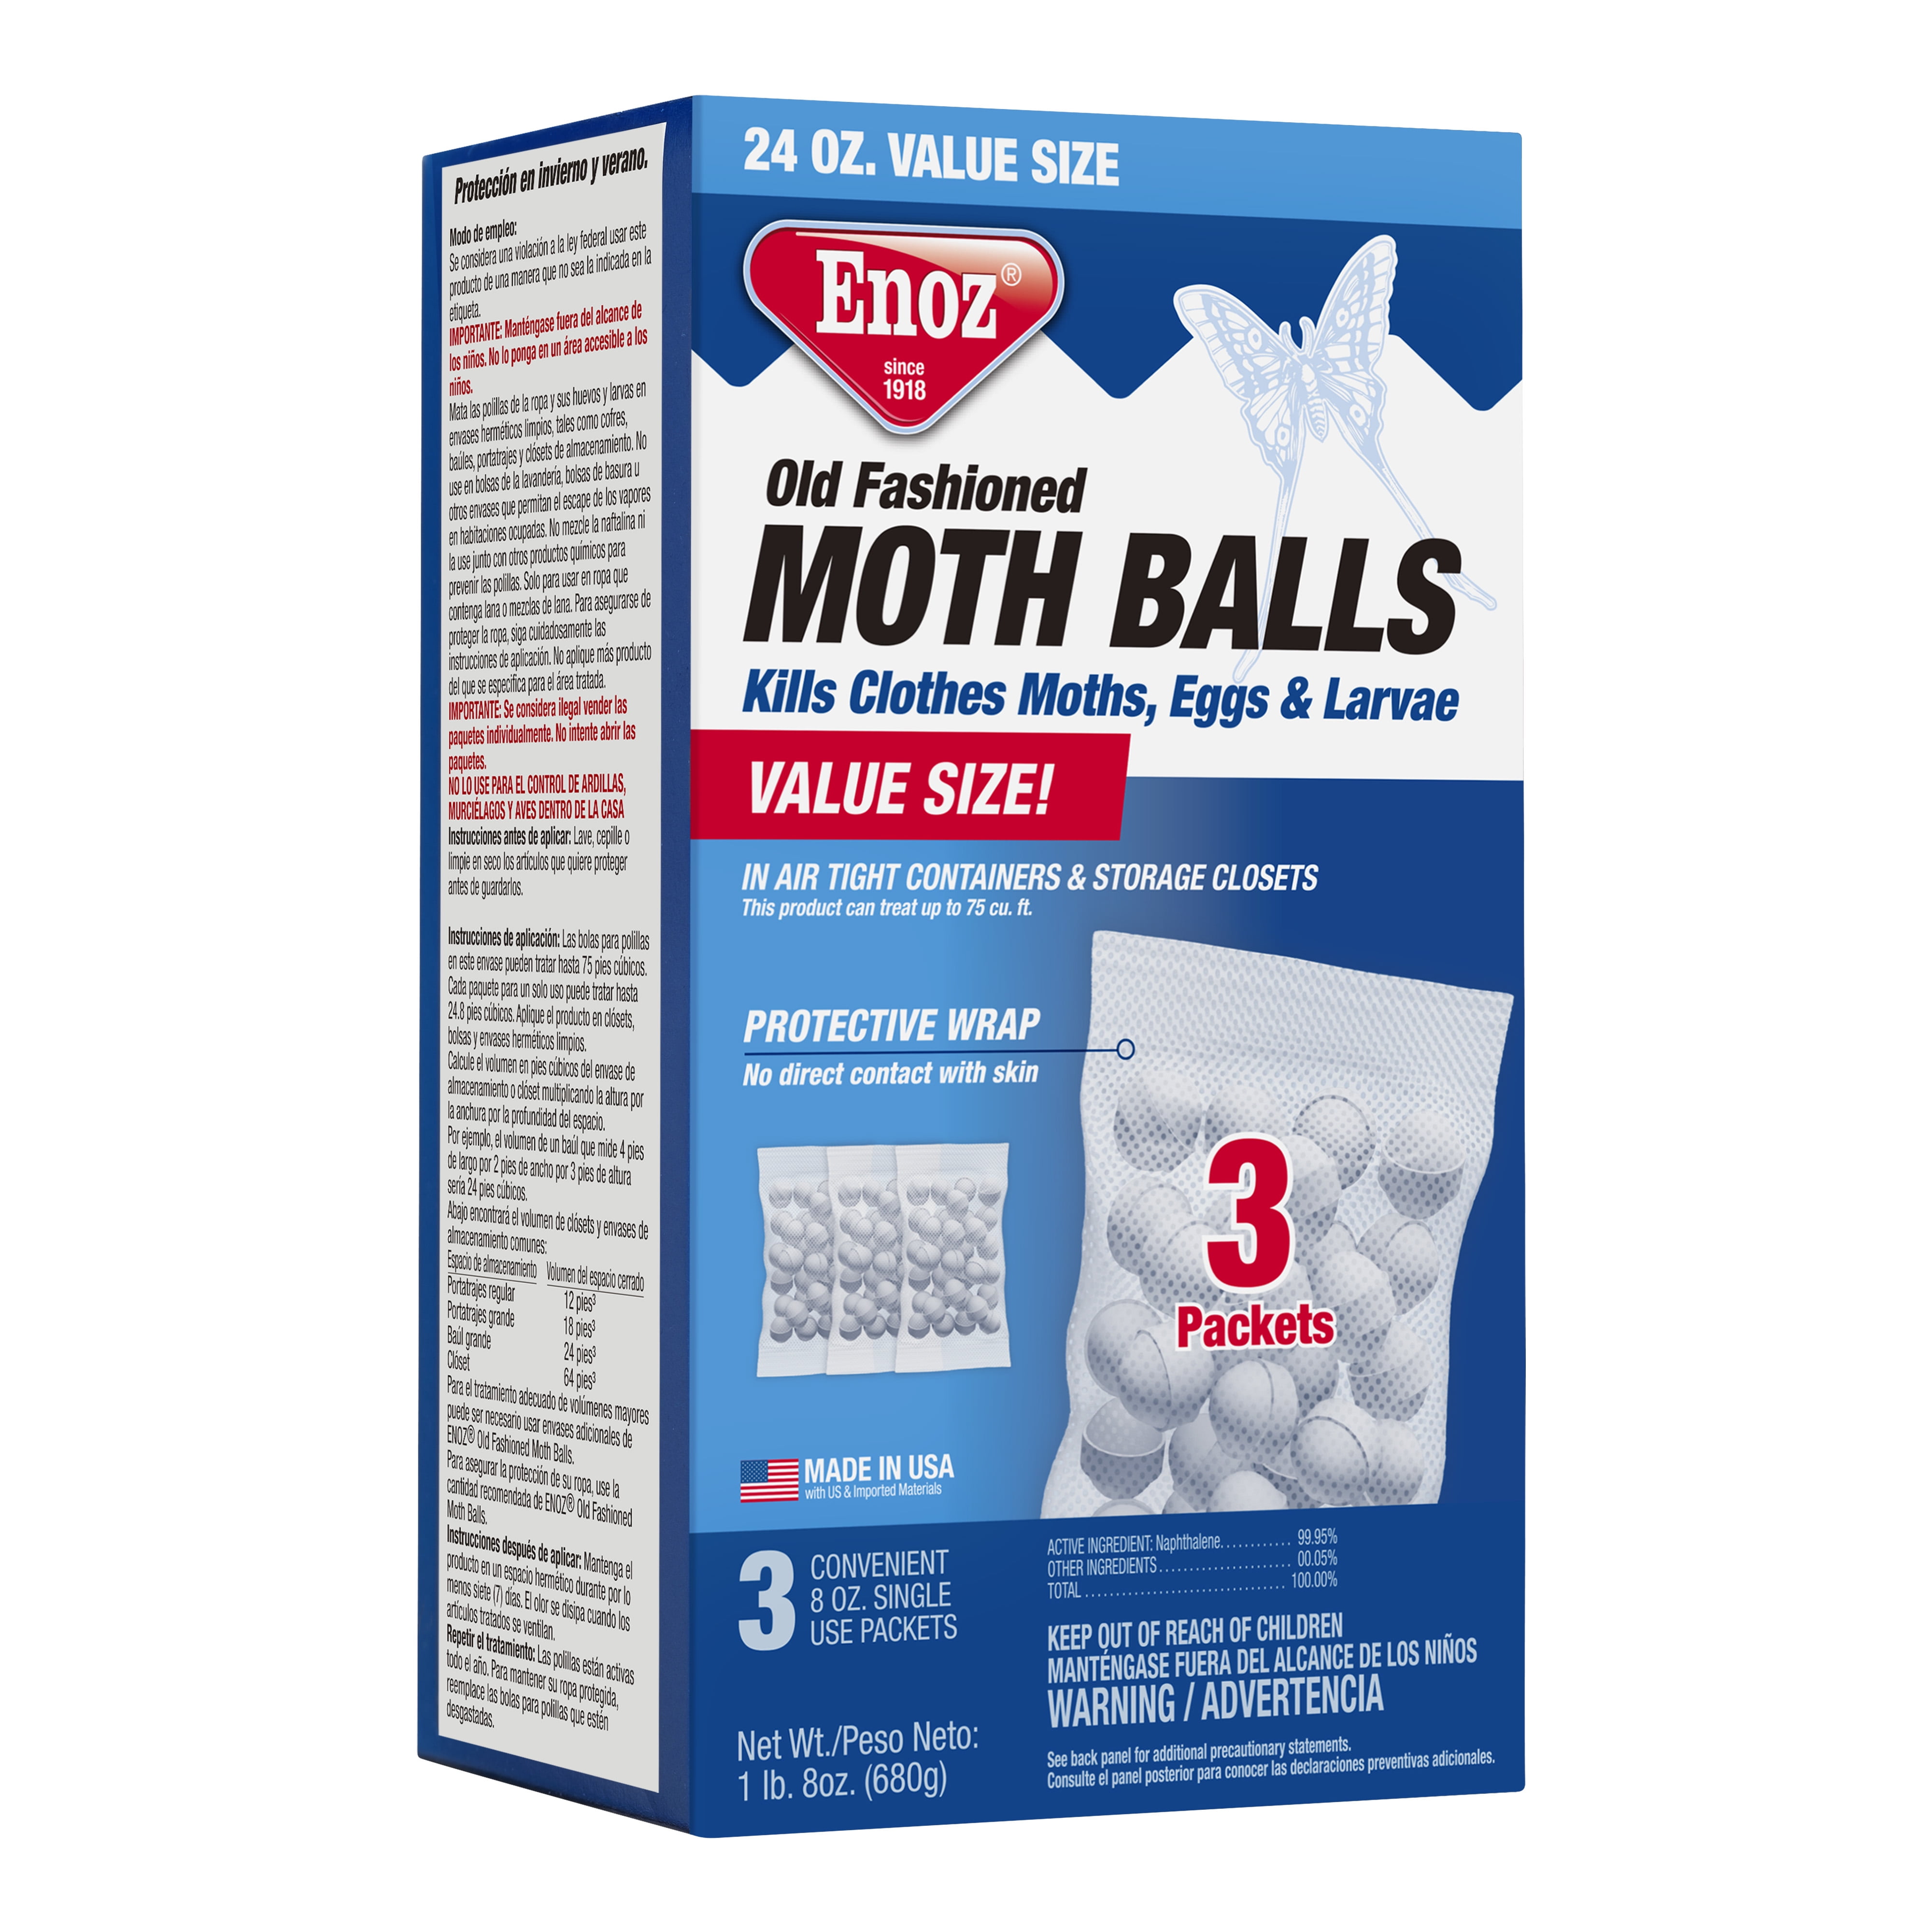 Moth Balls, 2 Pk